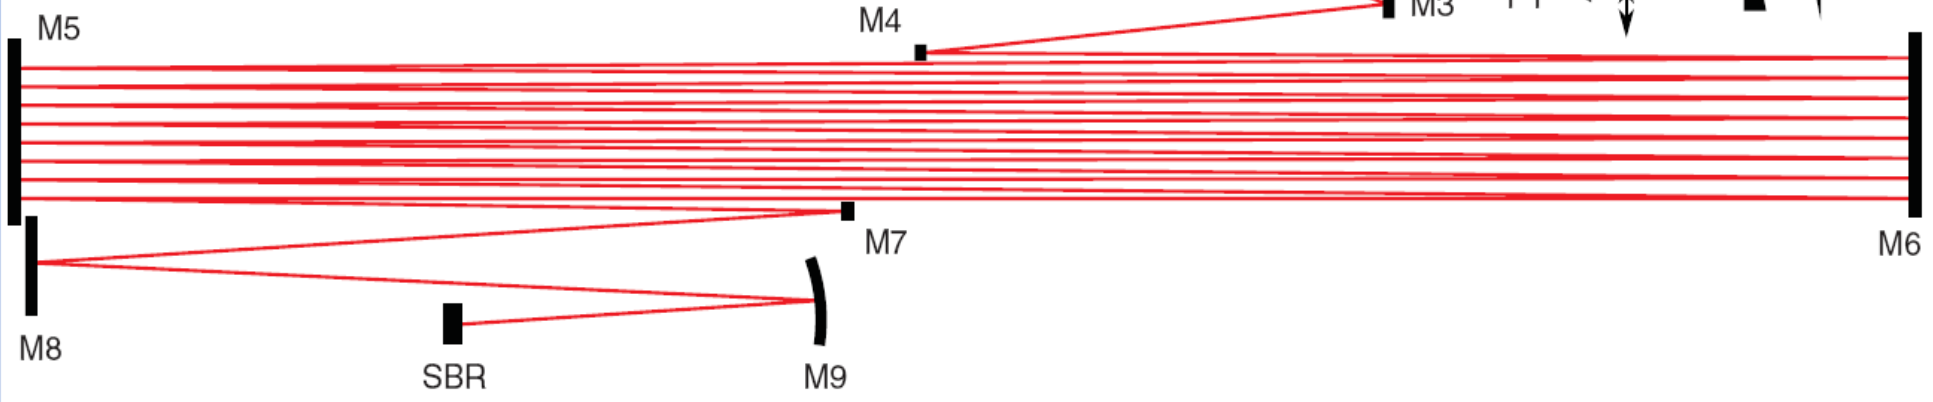 6 MHz MHz-range Ti:saphire laser 50 fs sub-µj-pulses DPSS pump laser Applications: